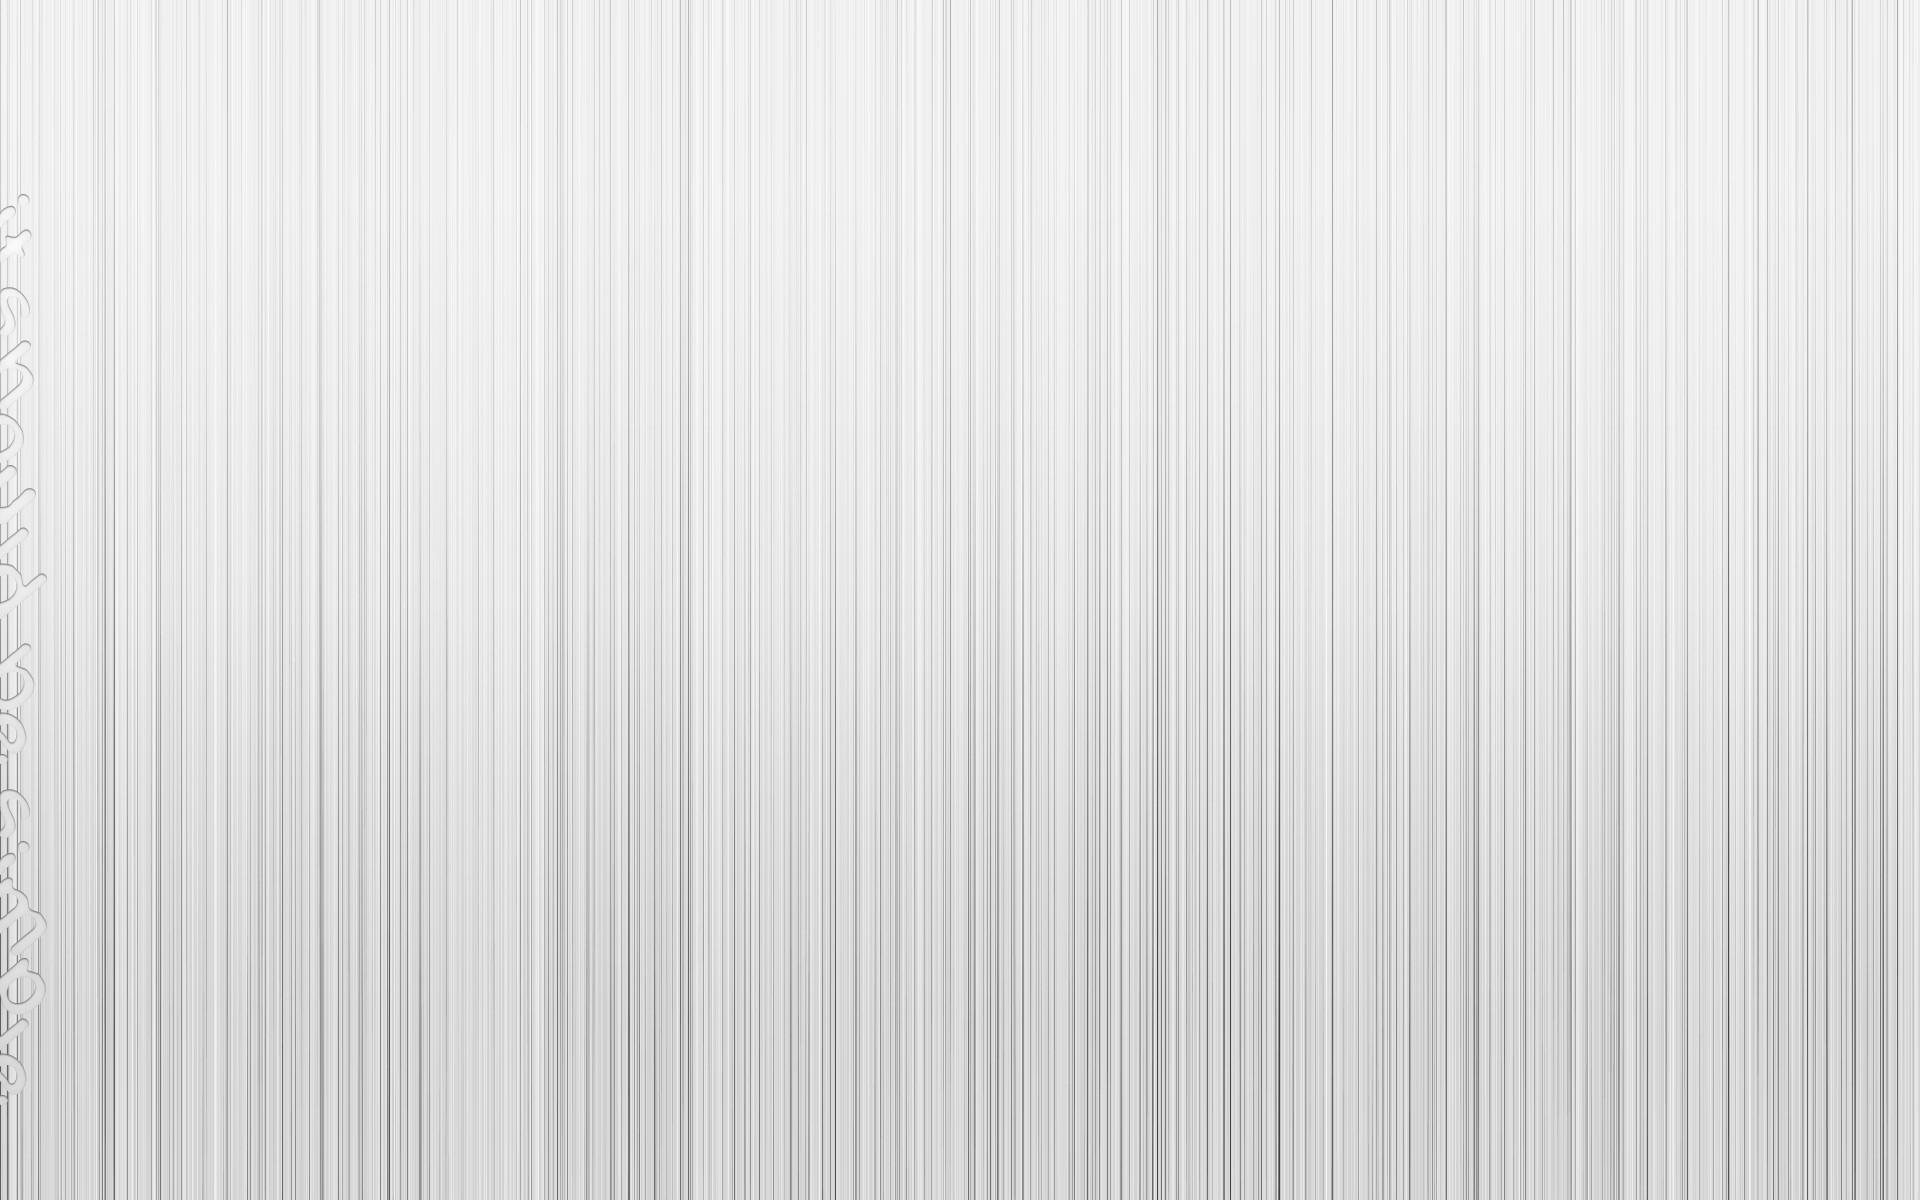 General 1920x1200 vertical lines lines texture minimalism digital art simple background